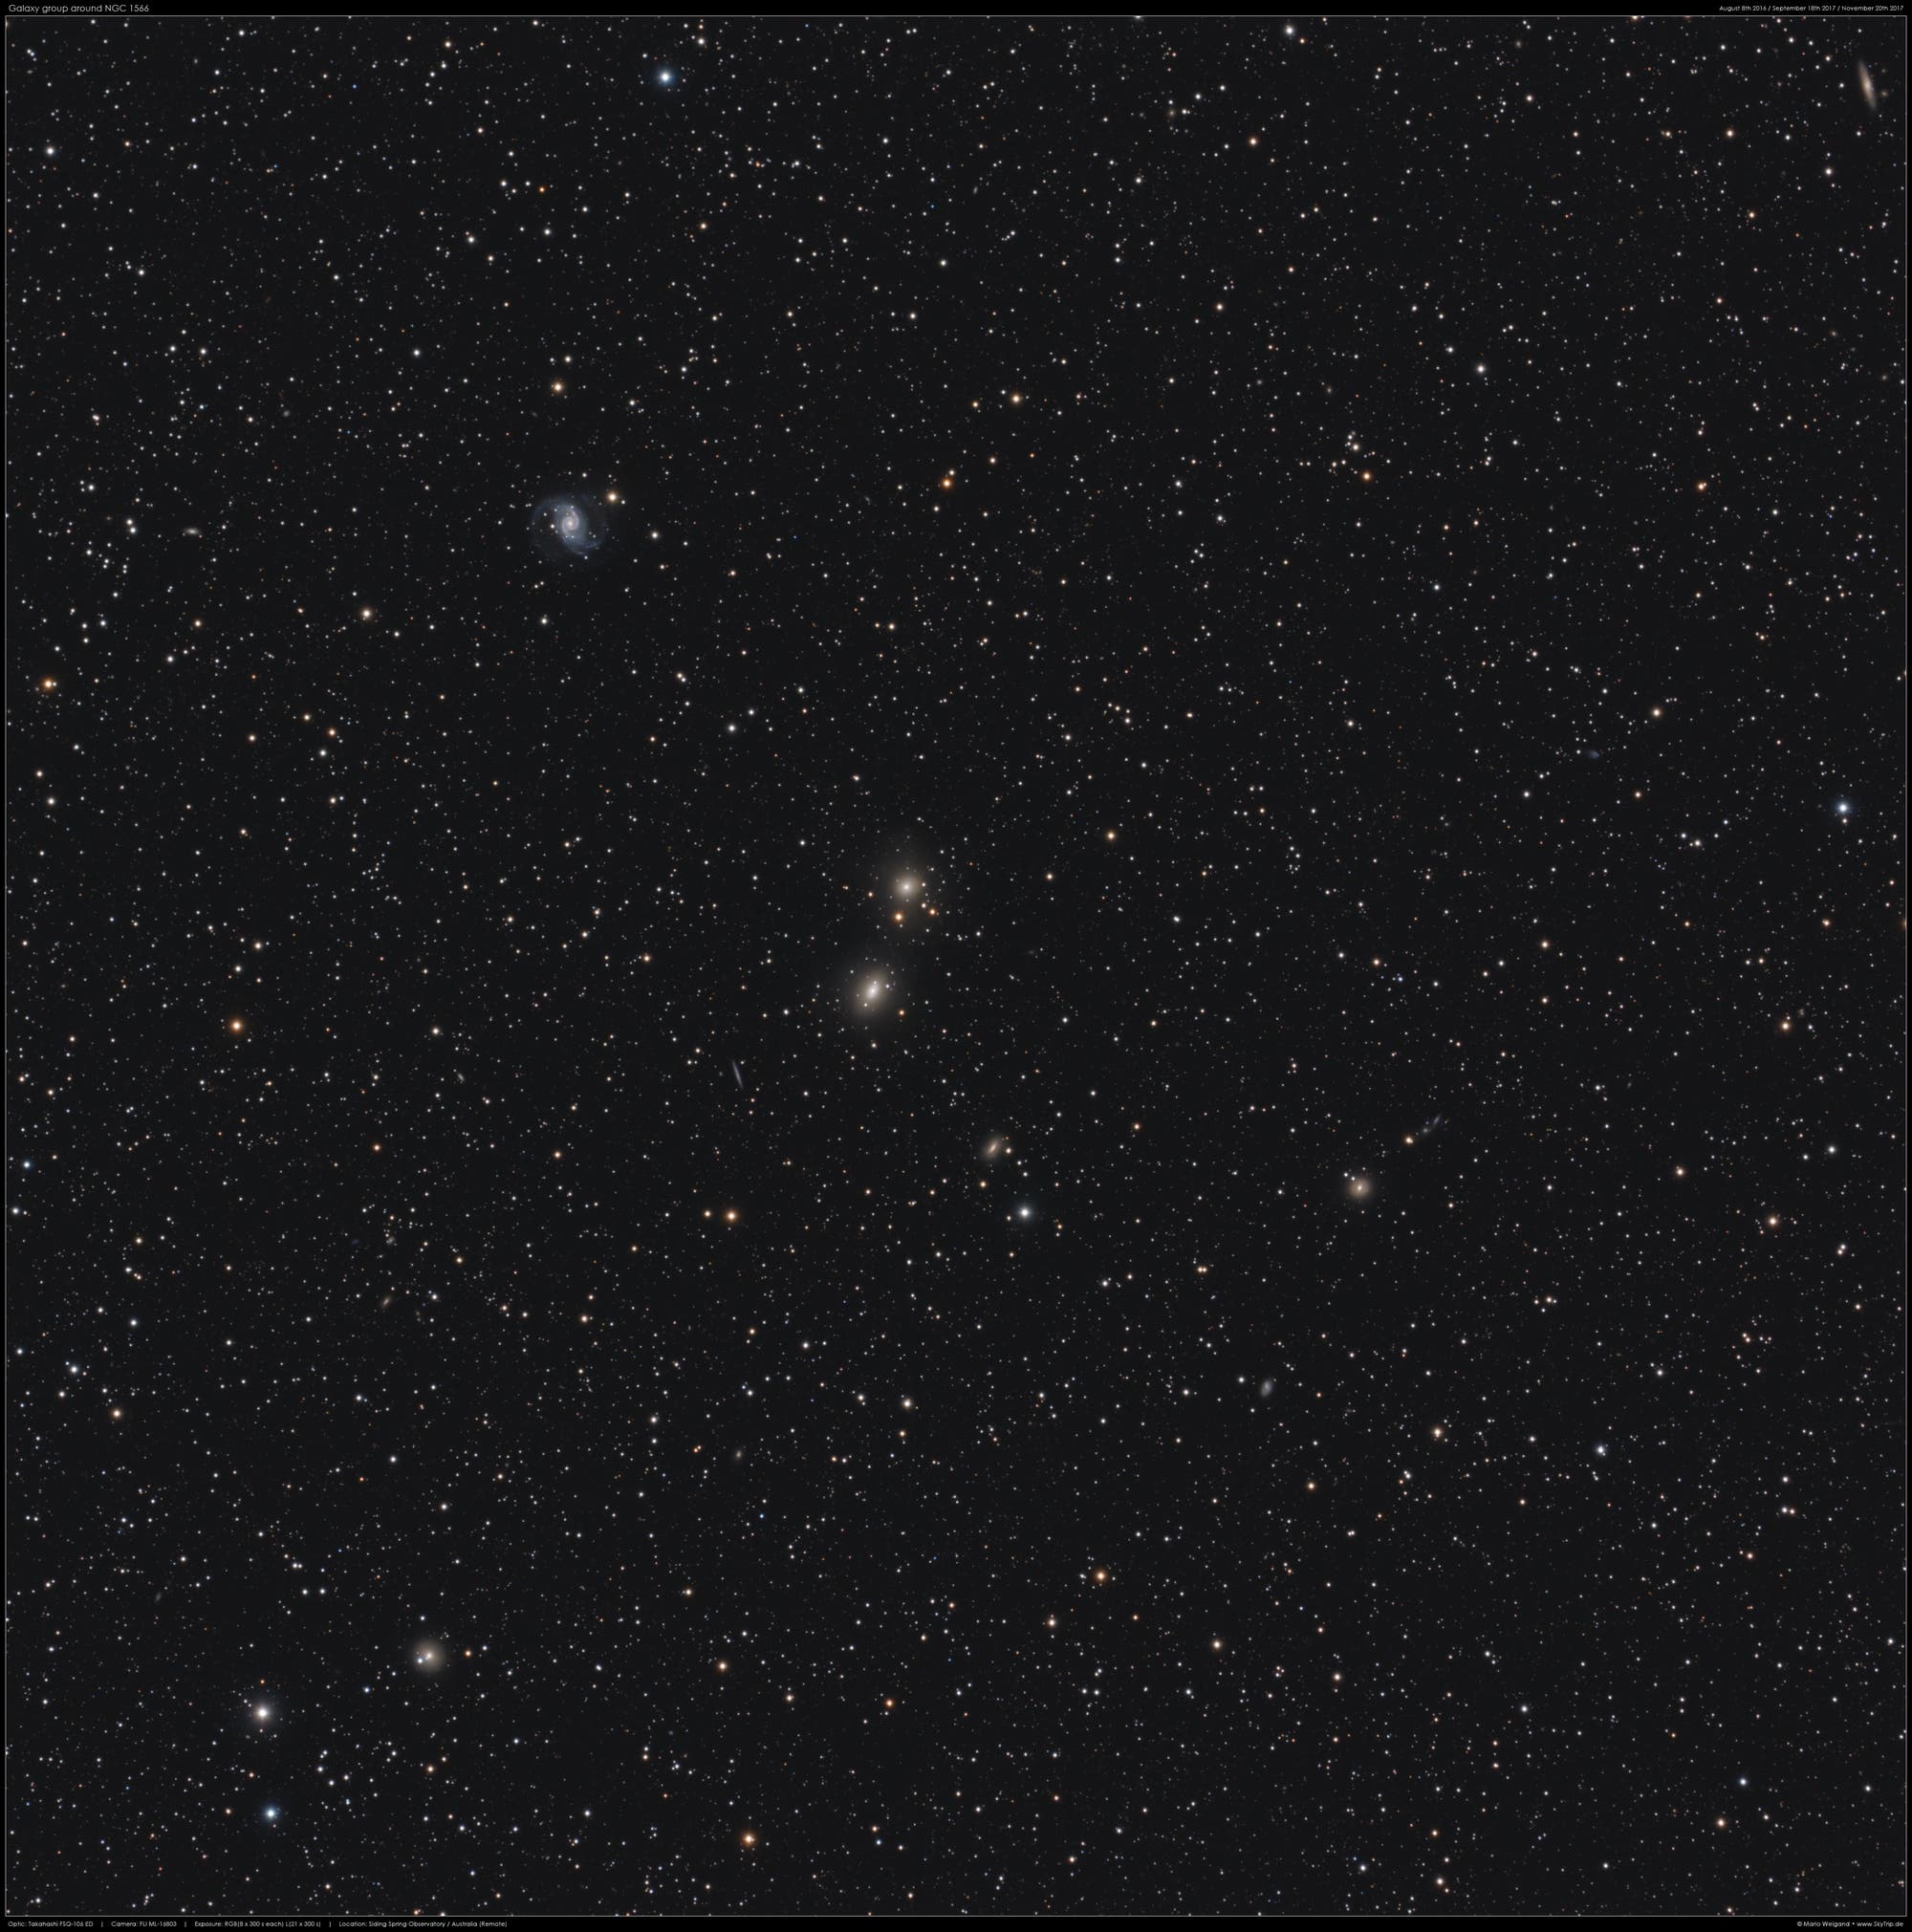 Galaxiengruppe NGC 1566 & Co. im Sternbild Doradus